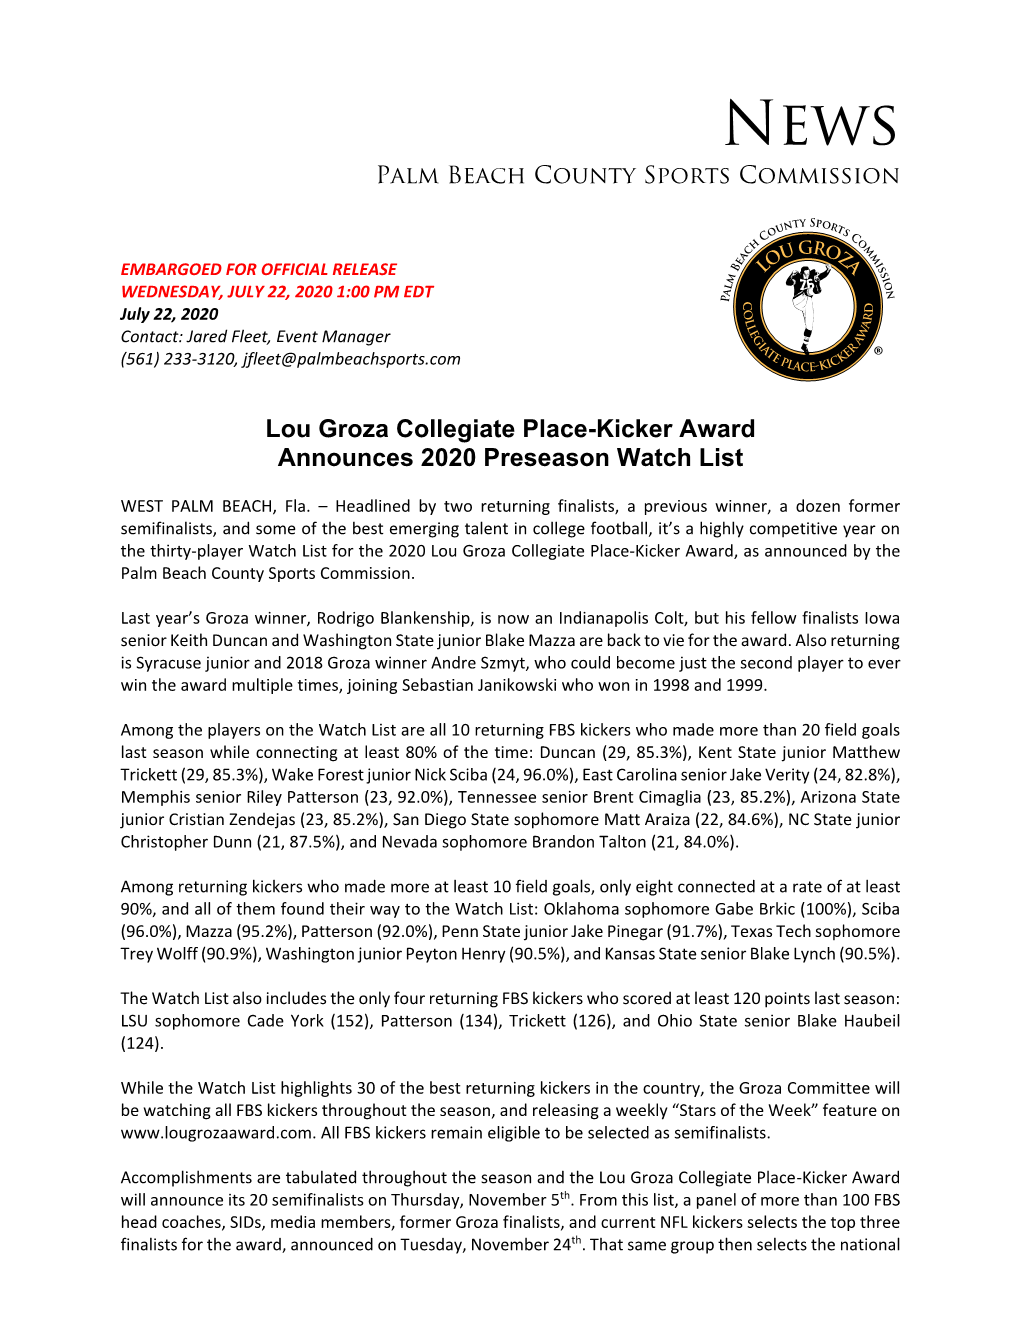 Lou Groza Collegiate Place-Kicker Award Announces 2020 Preseason Watch List